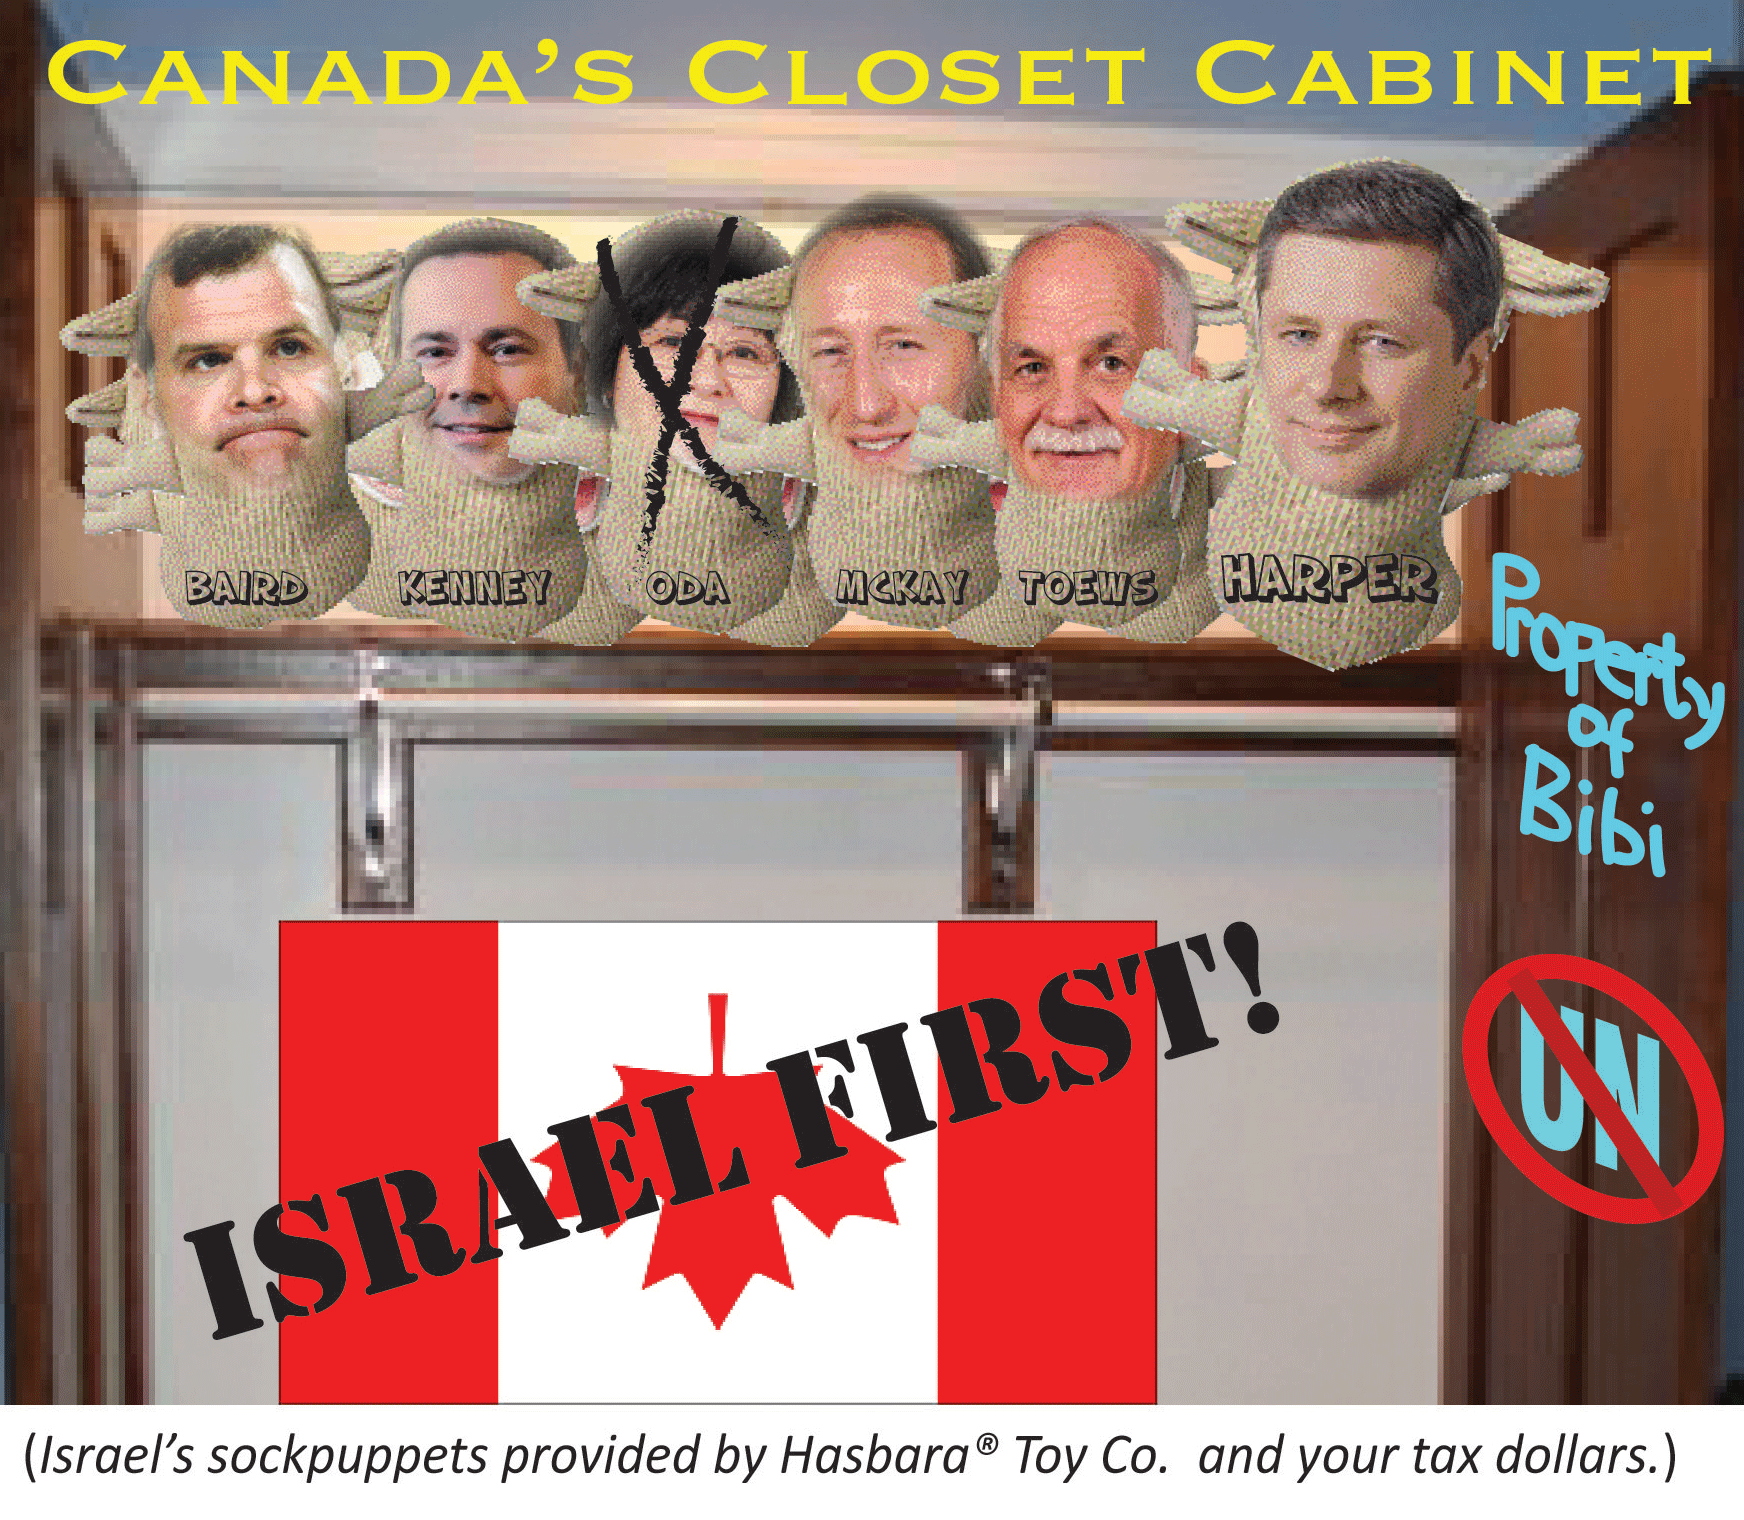 Harper’s Criminal Closet